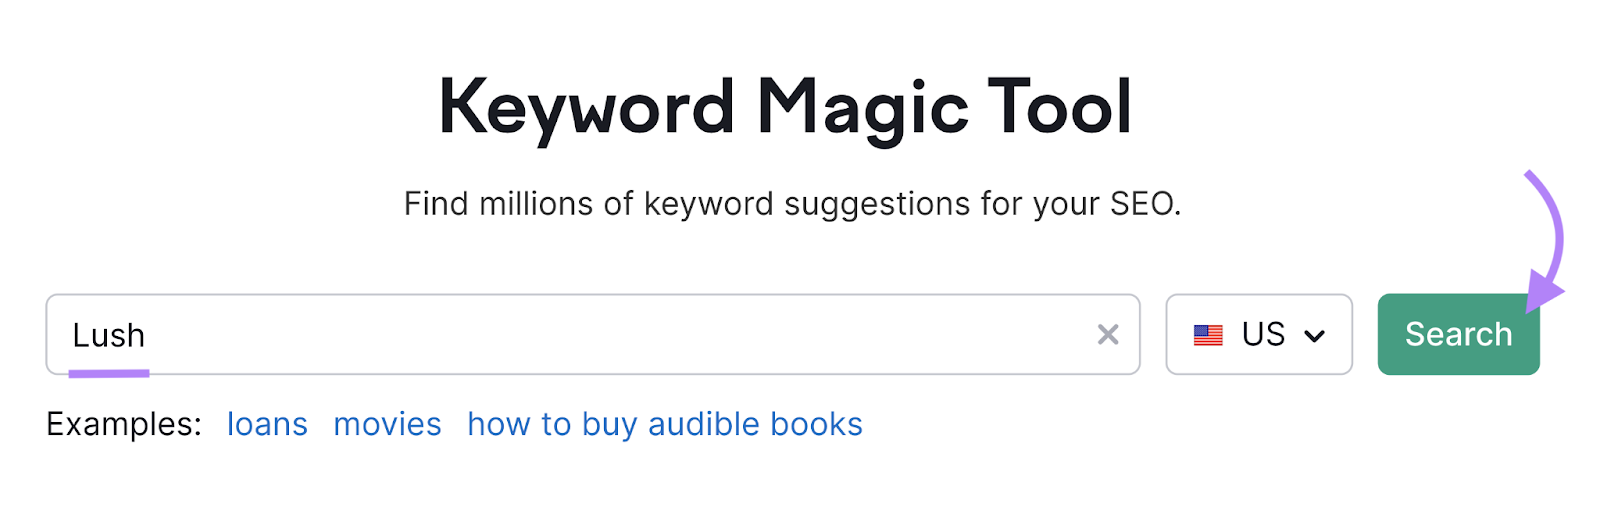 Search "Lush" marque  sanction  successful  keyword magic tool